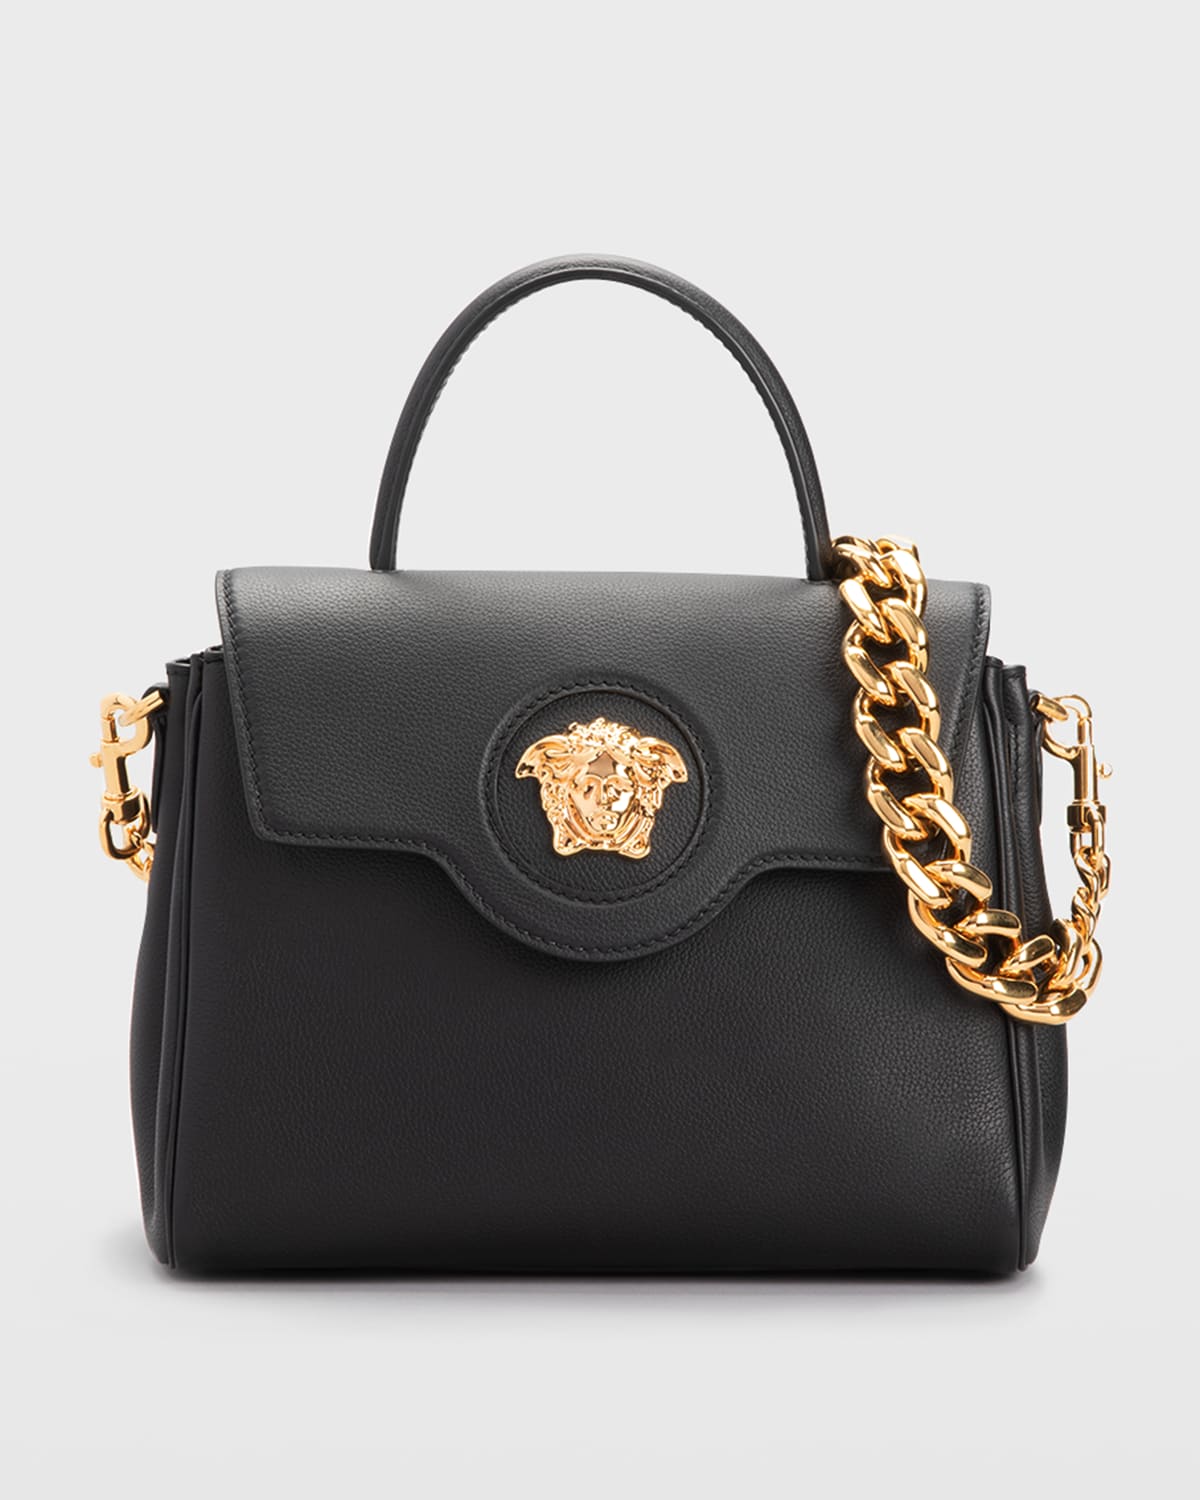 Versace Mini La Medusa Leather Top Handle Bag Black